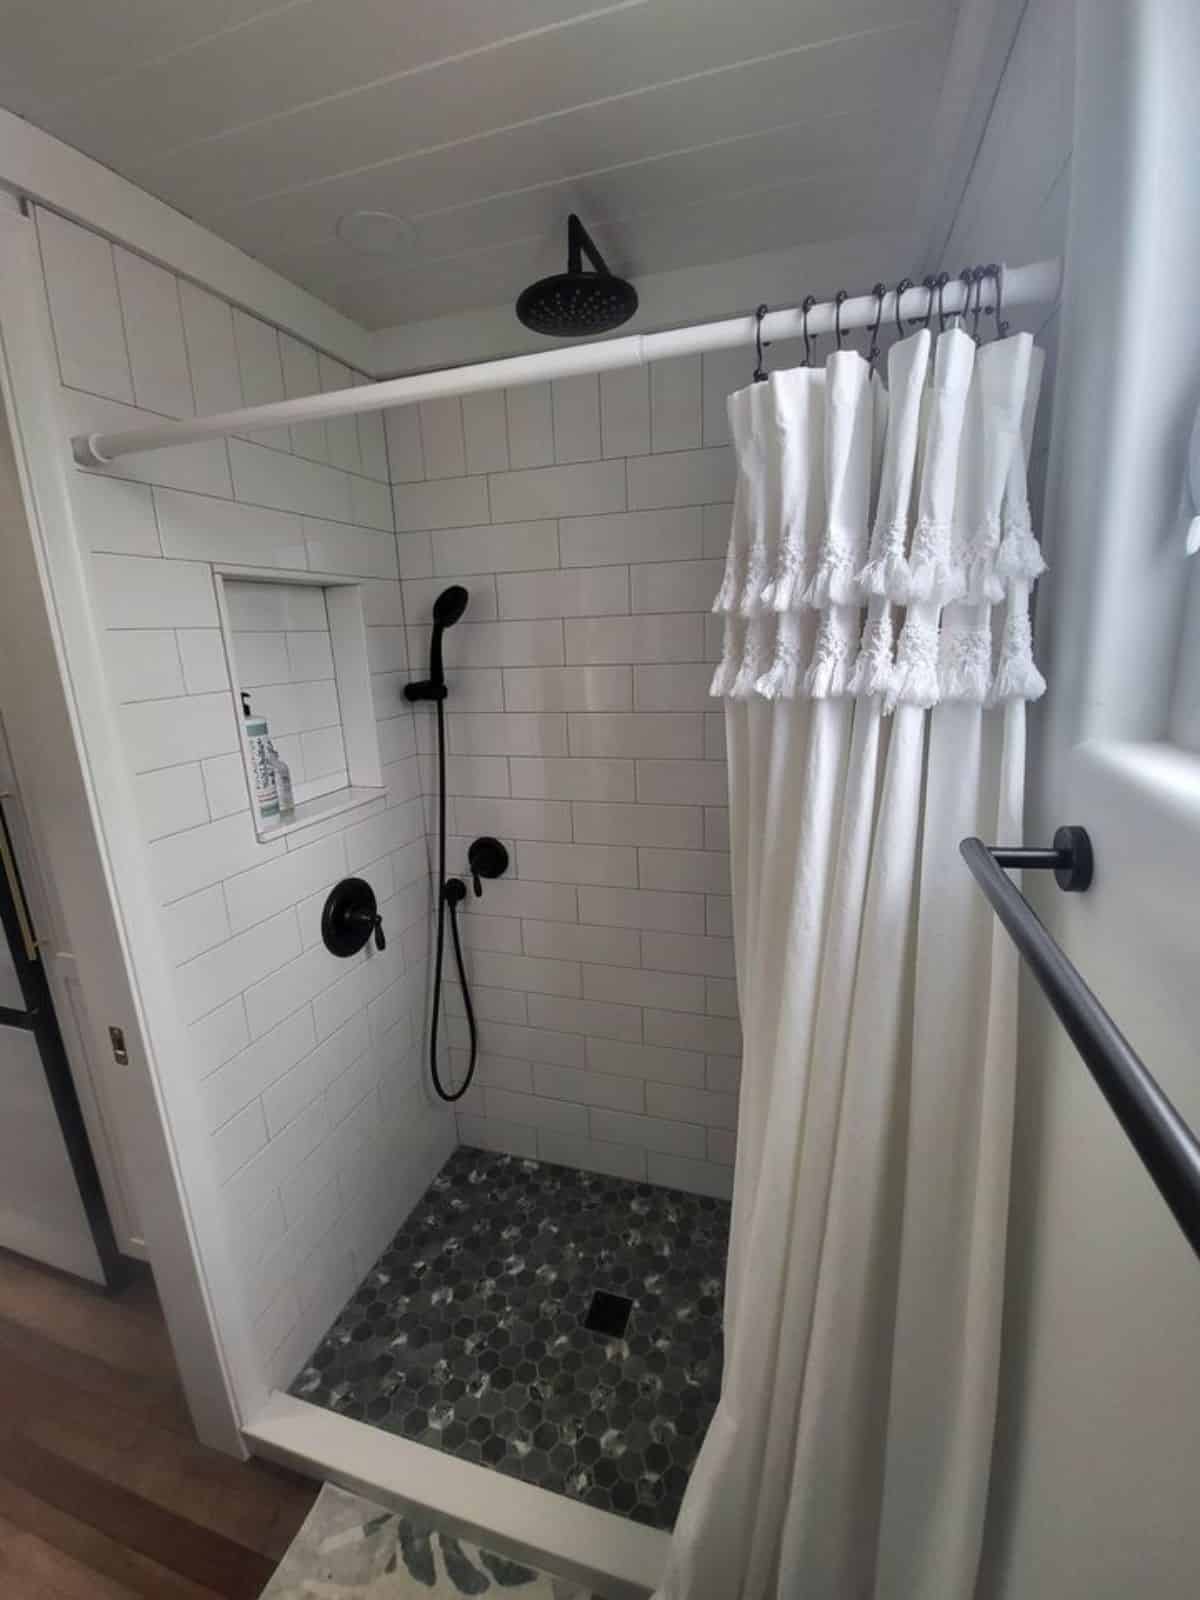 Amazing tiled shower area in bathroom